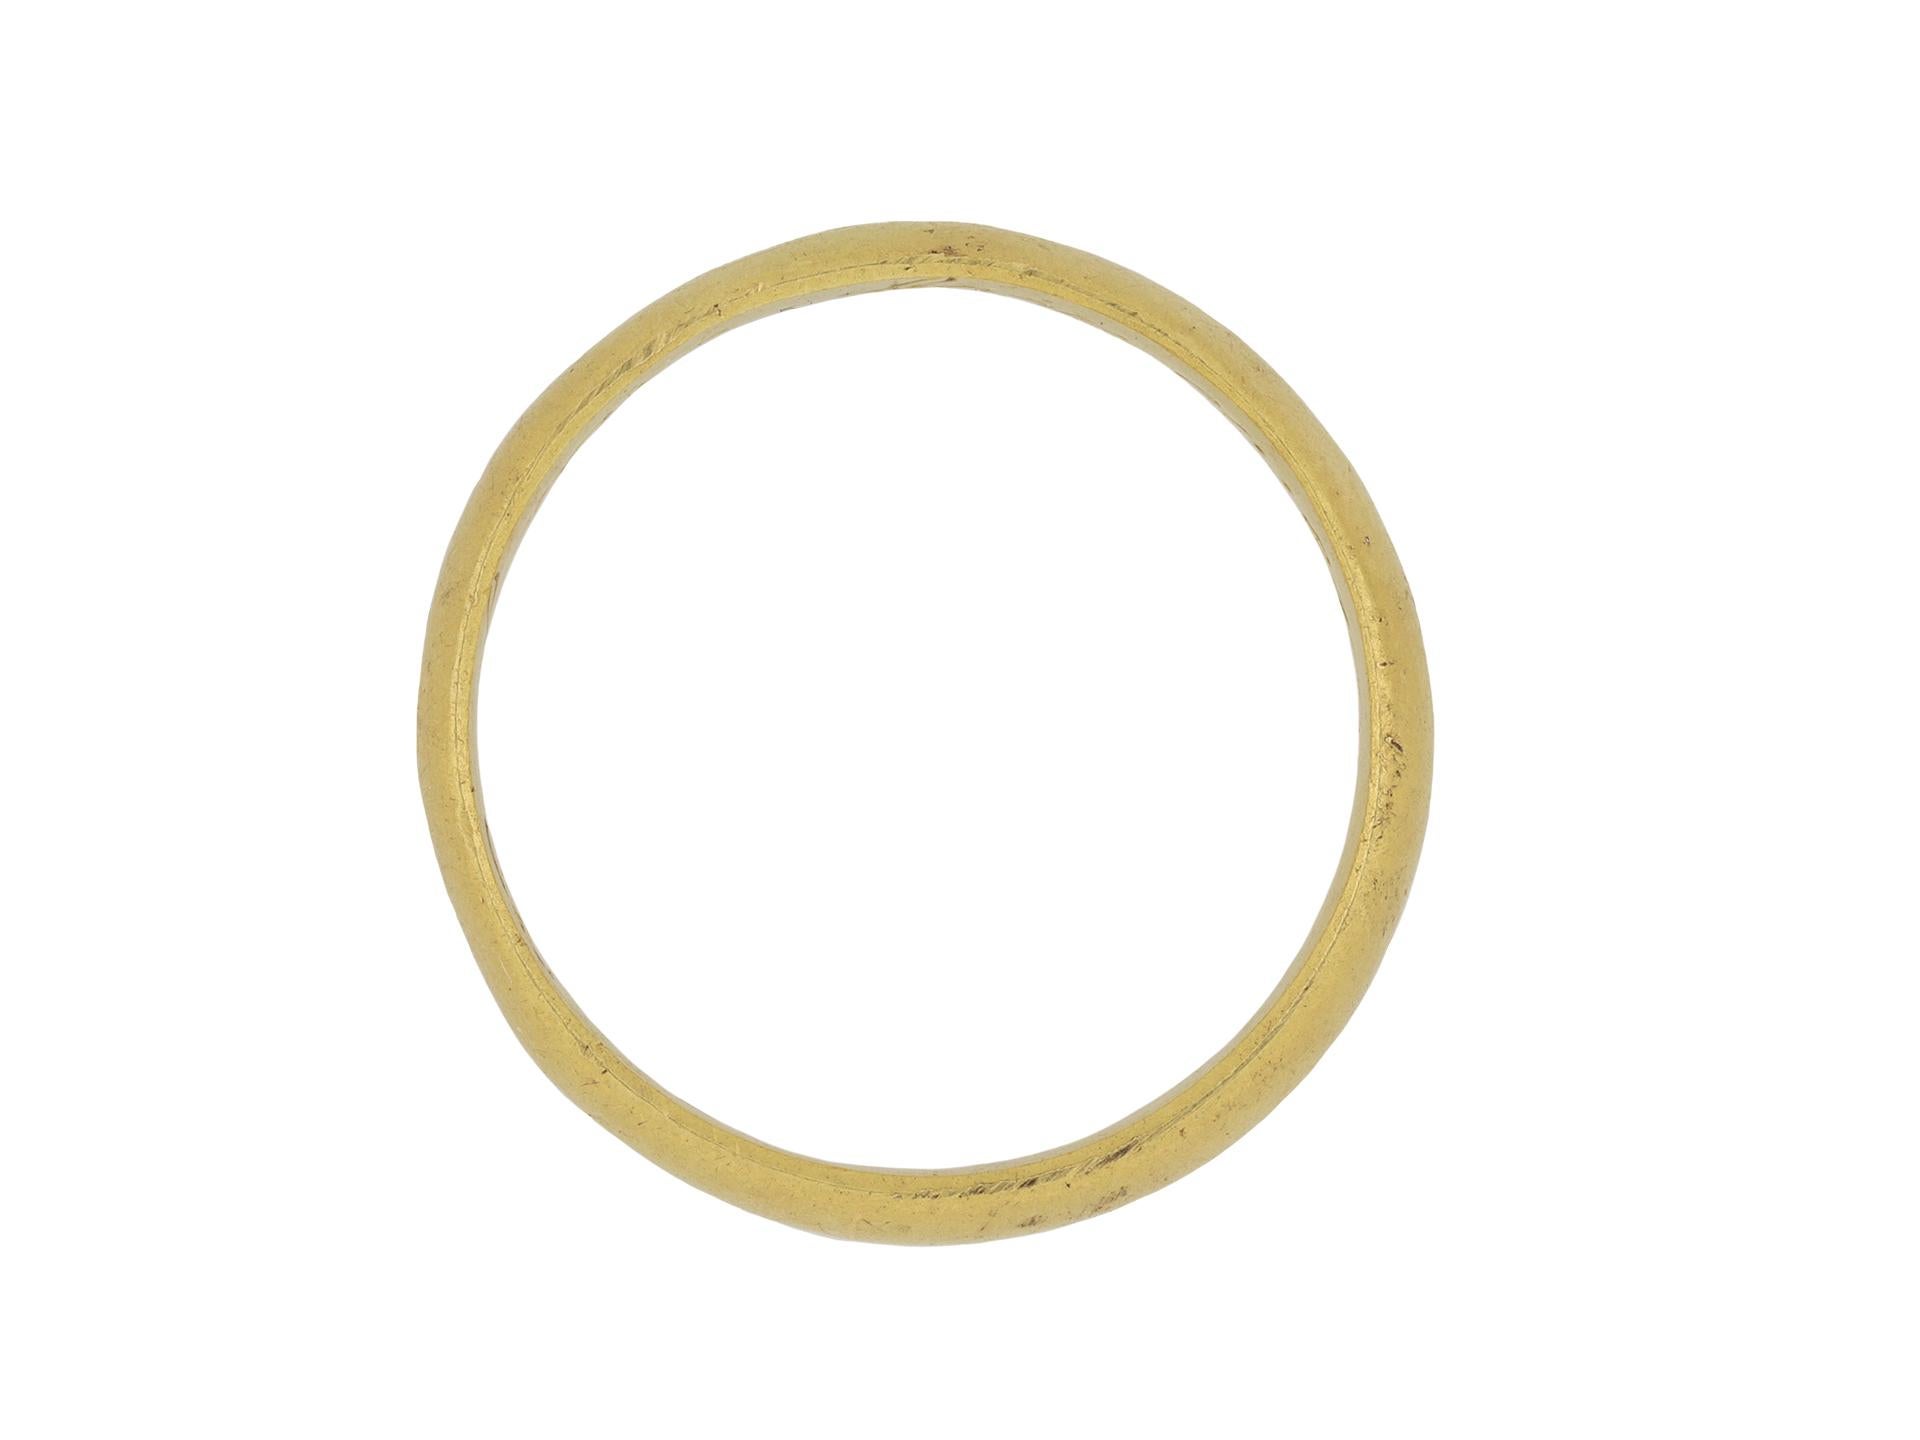 medieval posy ring